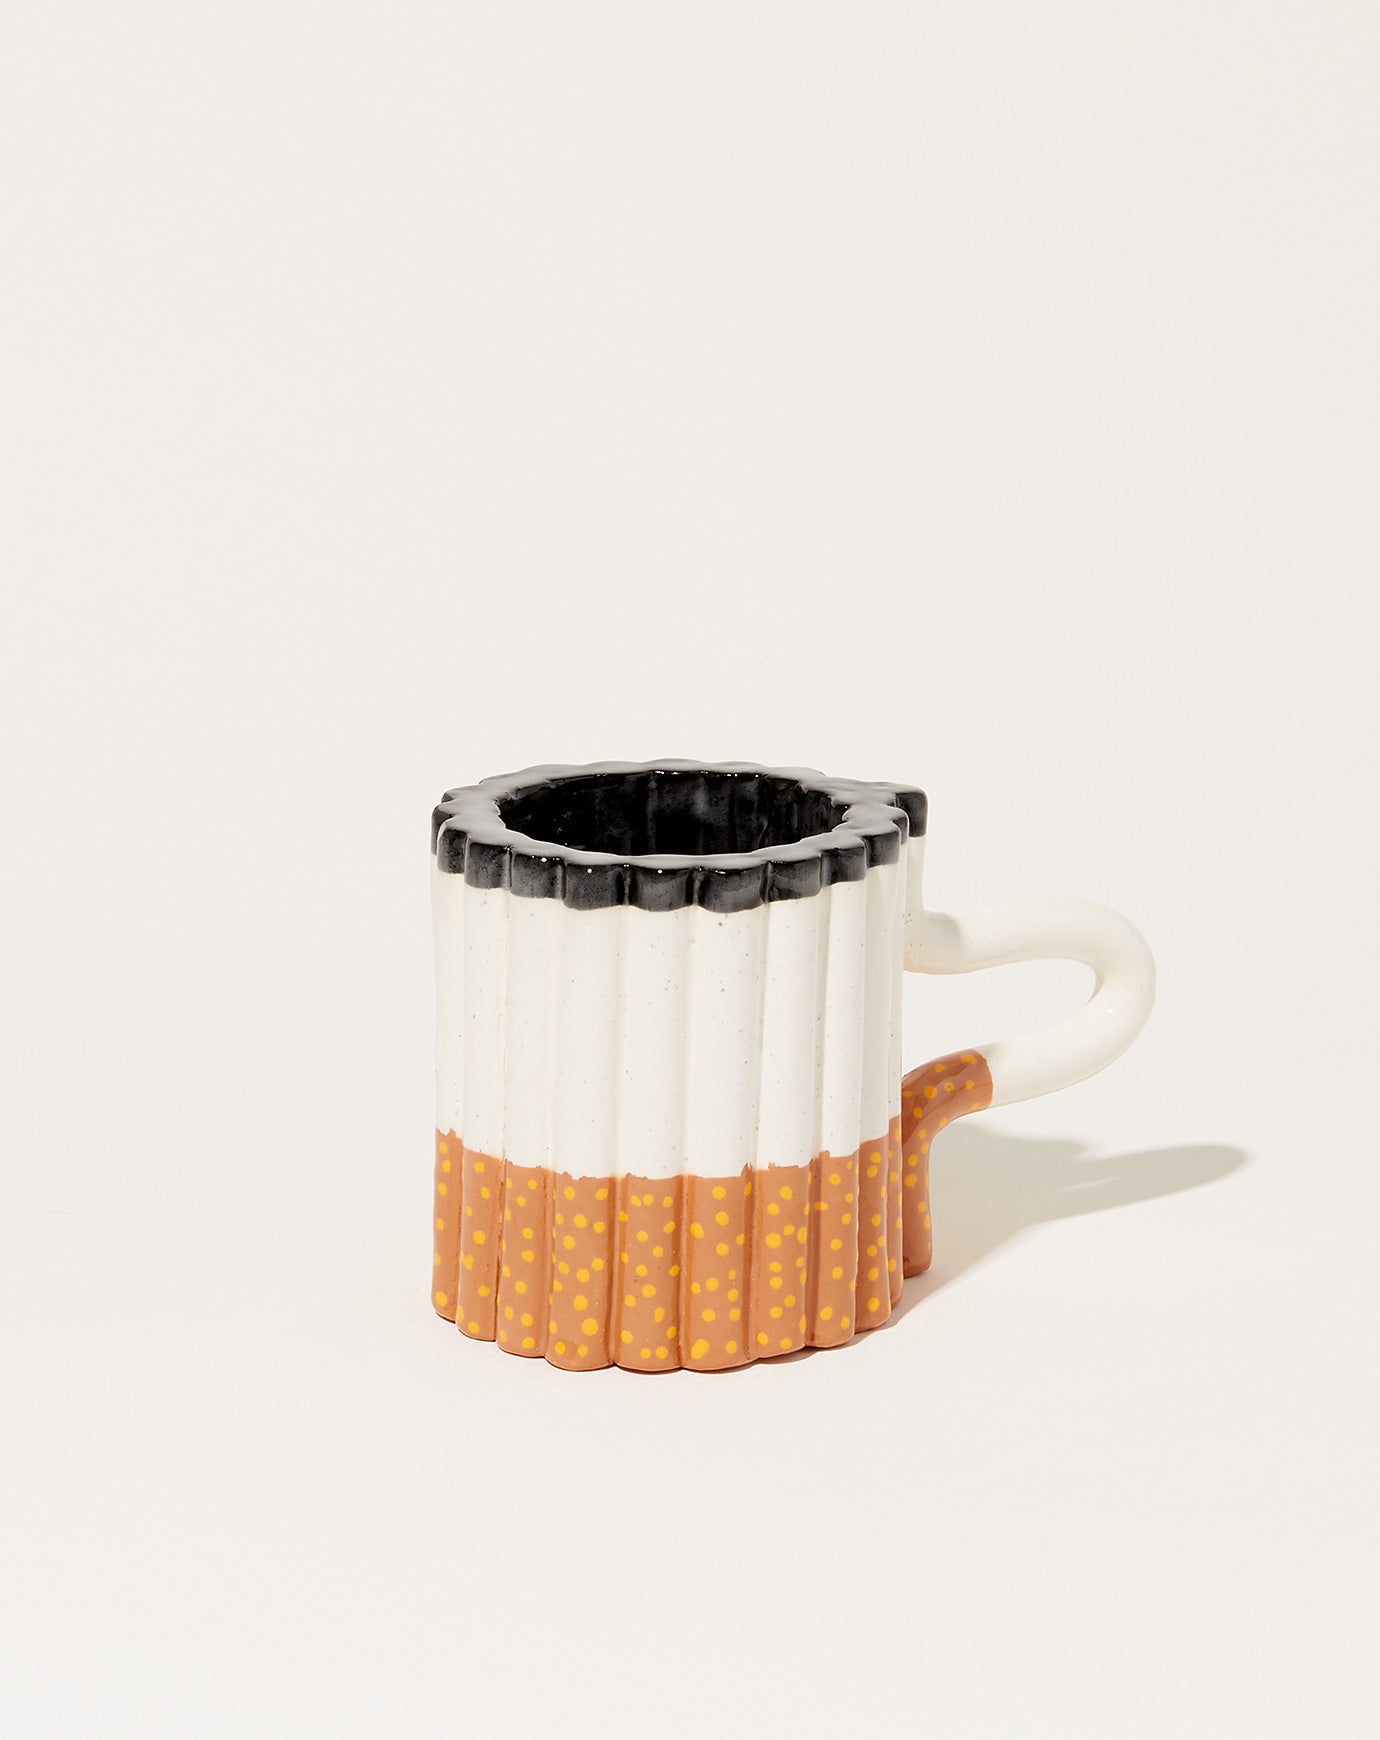 Joseph Algeri Cigarette Mug